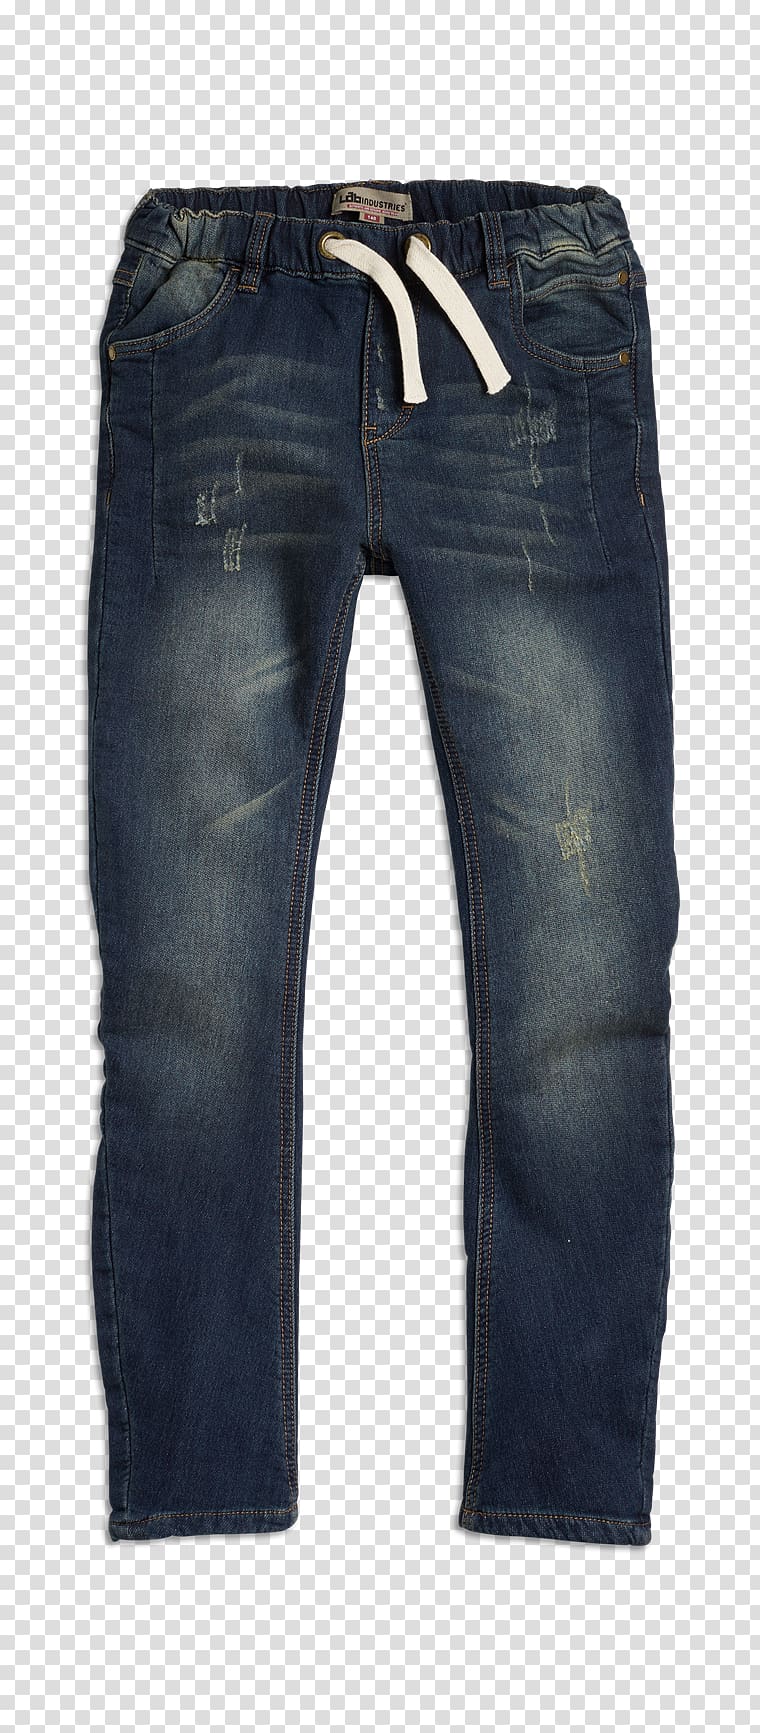 Jeans Denim Pants Clothing Lee, jeans transparent background PNG clipart